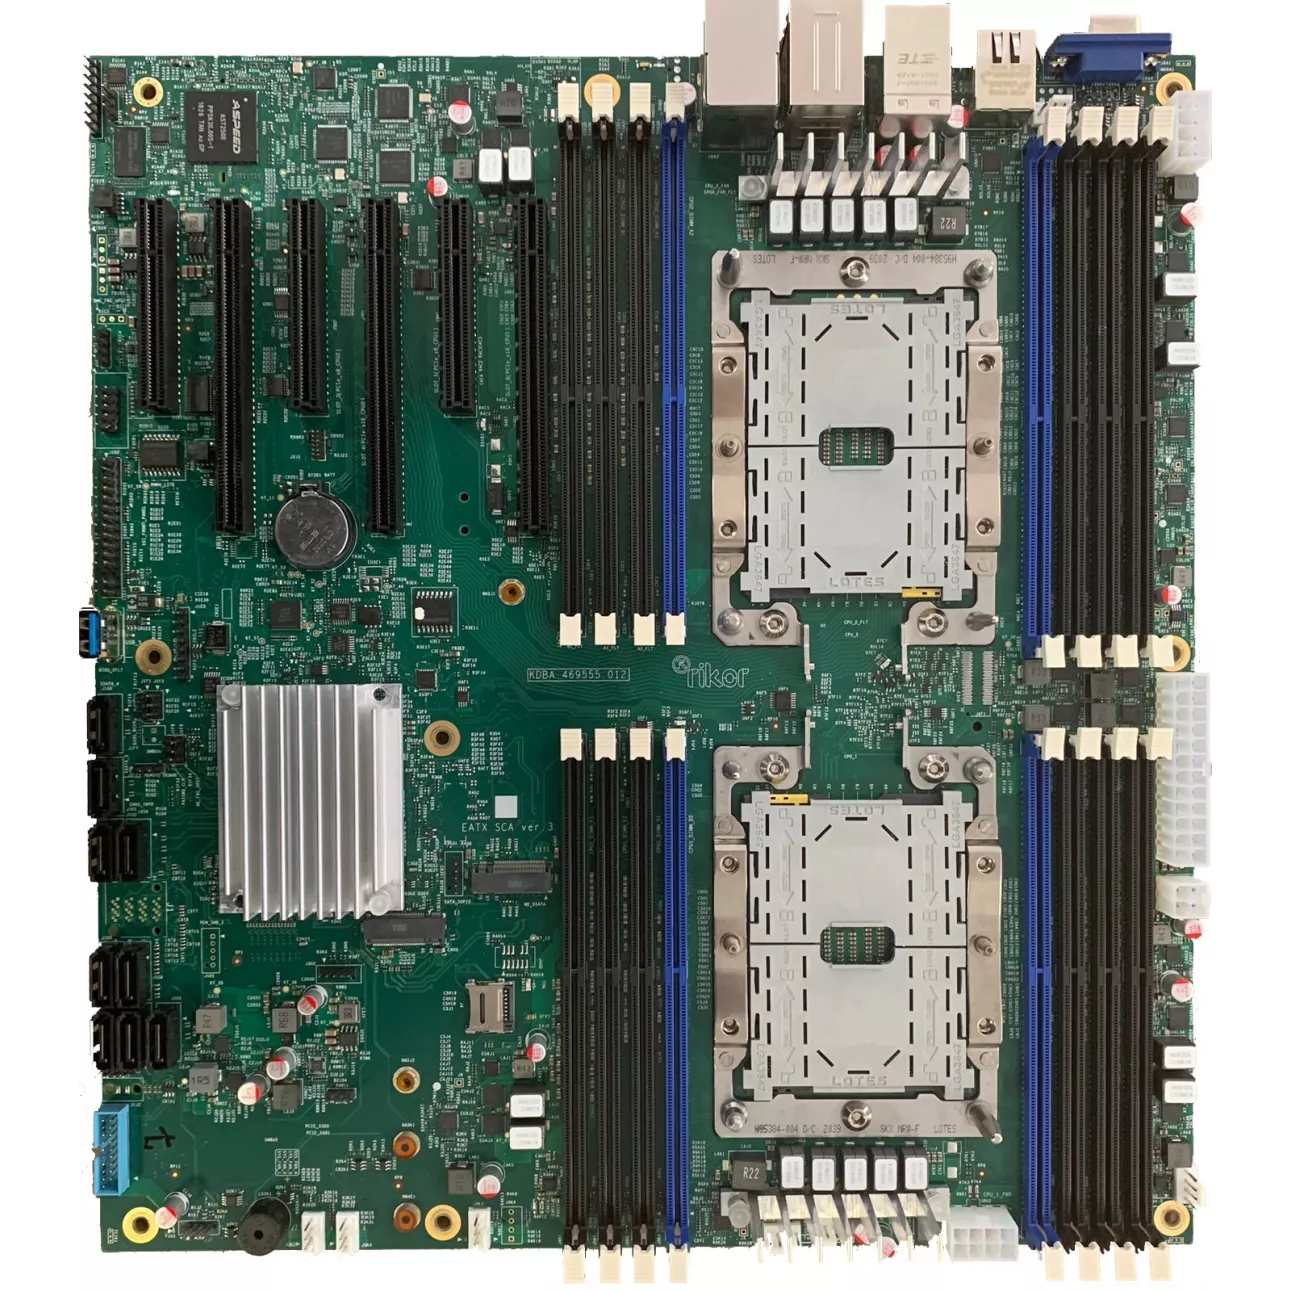 Серверная платформа Rikor 1U RP6108-PB25-650HS, до двух процессоров Intel Xeon Scalable, DDR4, 8x2.5" HDD, 2x1000Base-T, резервируемый БП